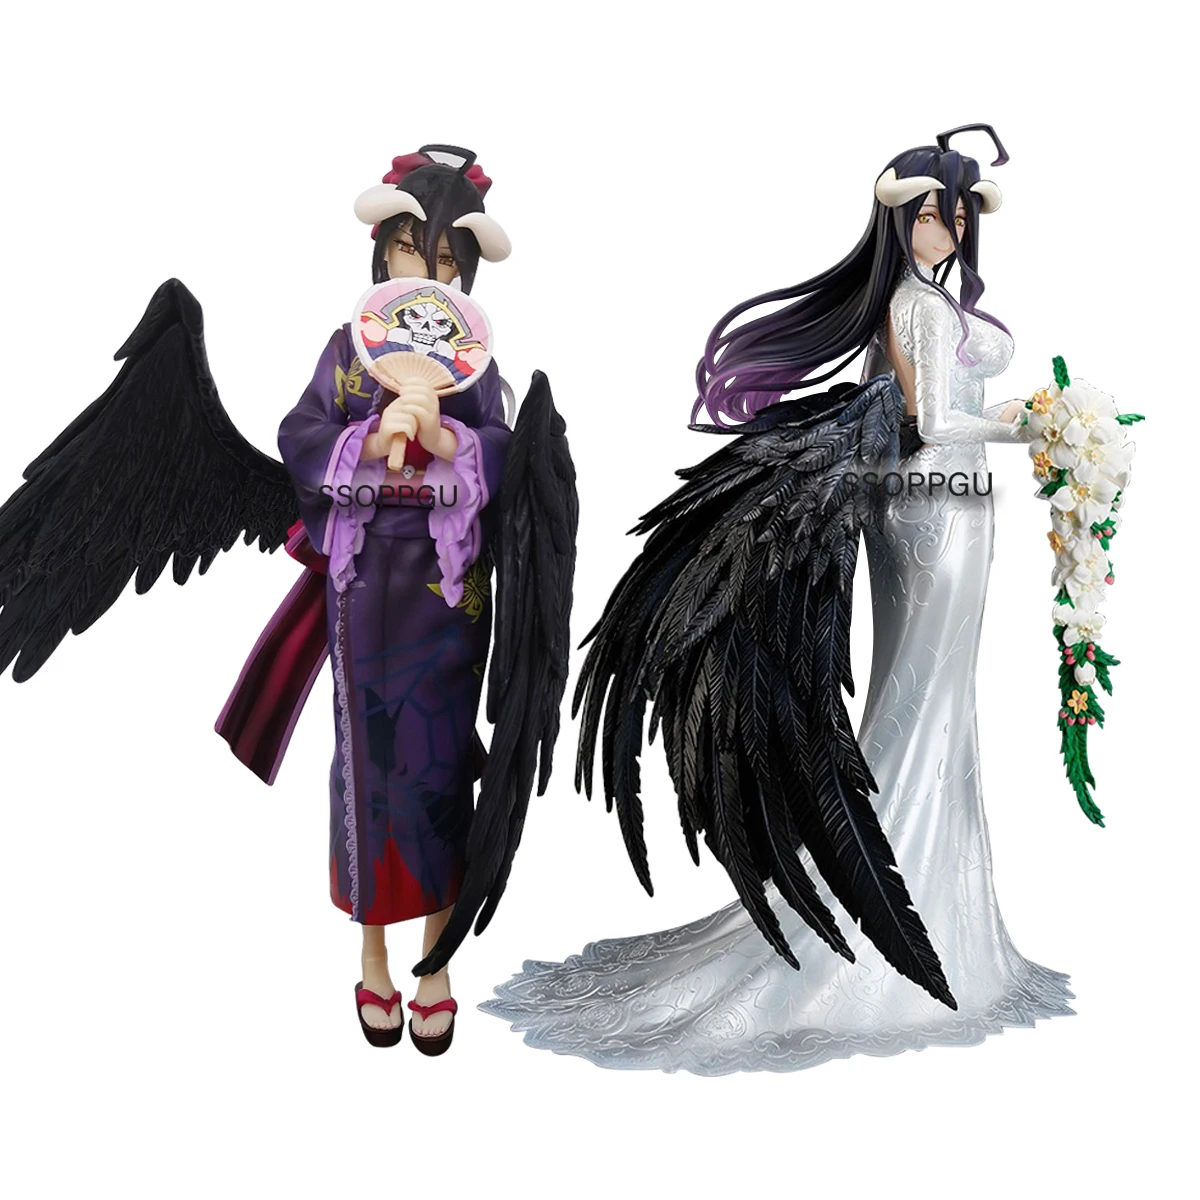 

24cm Japaense Anime OVERLORD Albedo Figure Wedding Dress Yukata kimono PVC Action Figure Statue Model Collectible Toy Doll Gifts